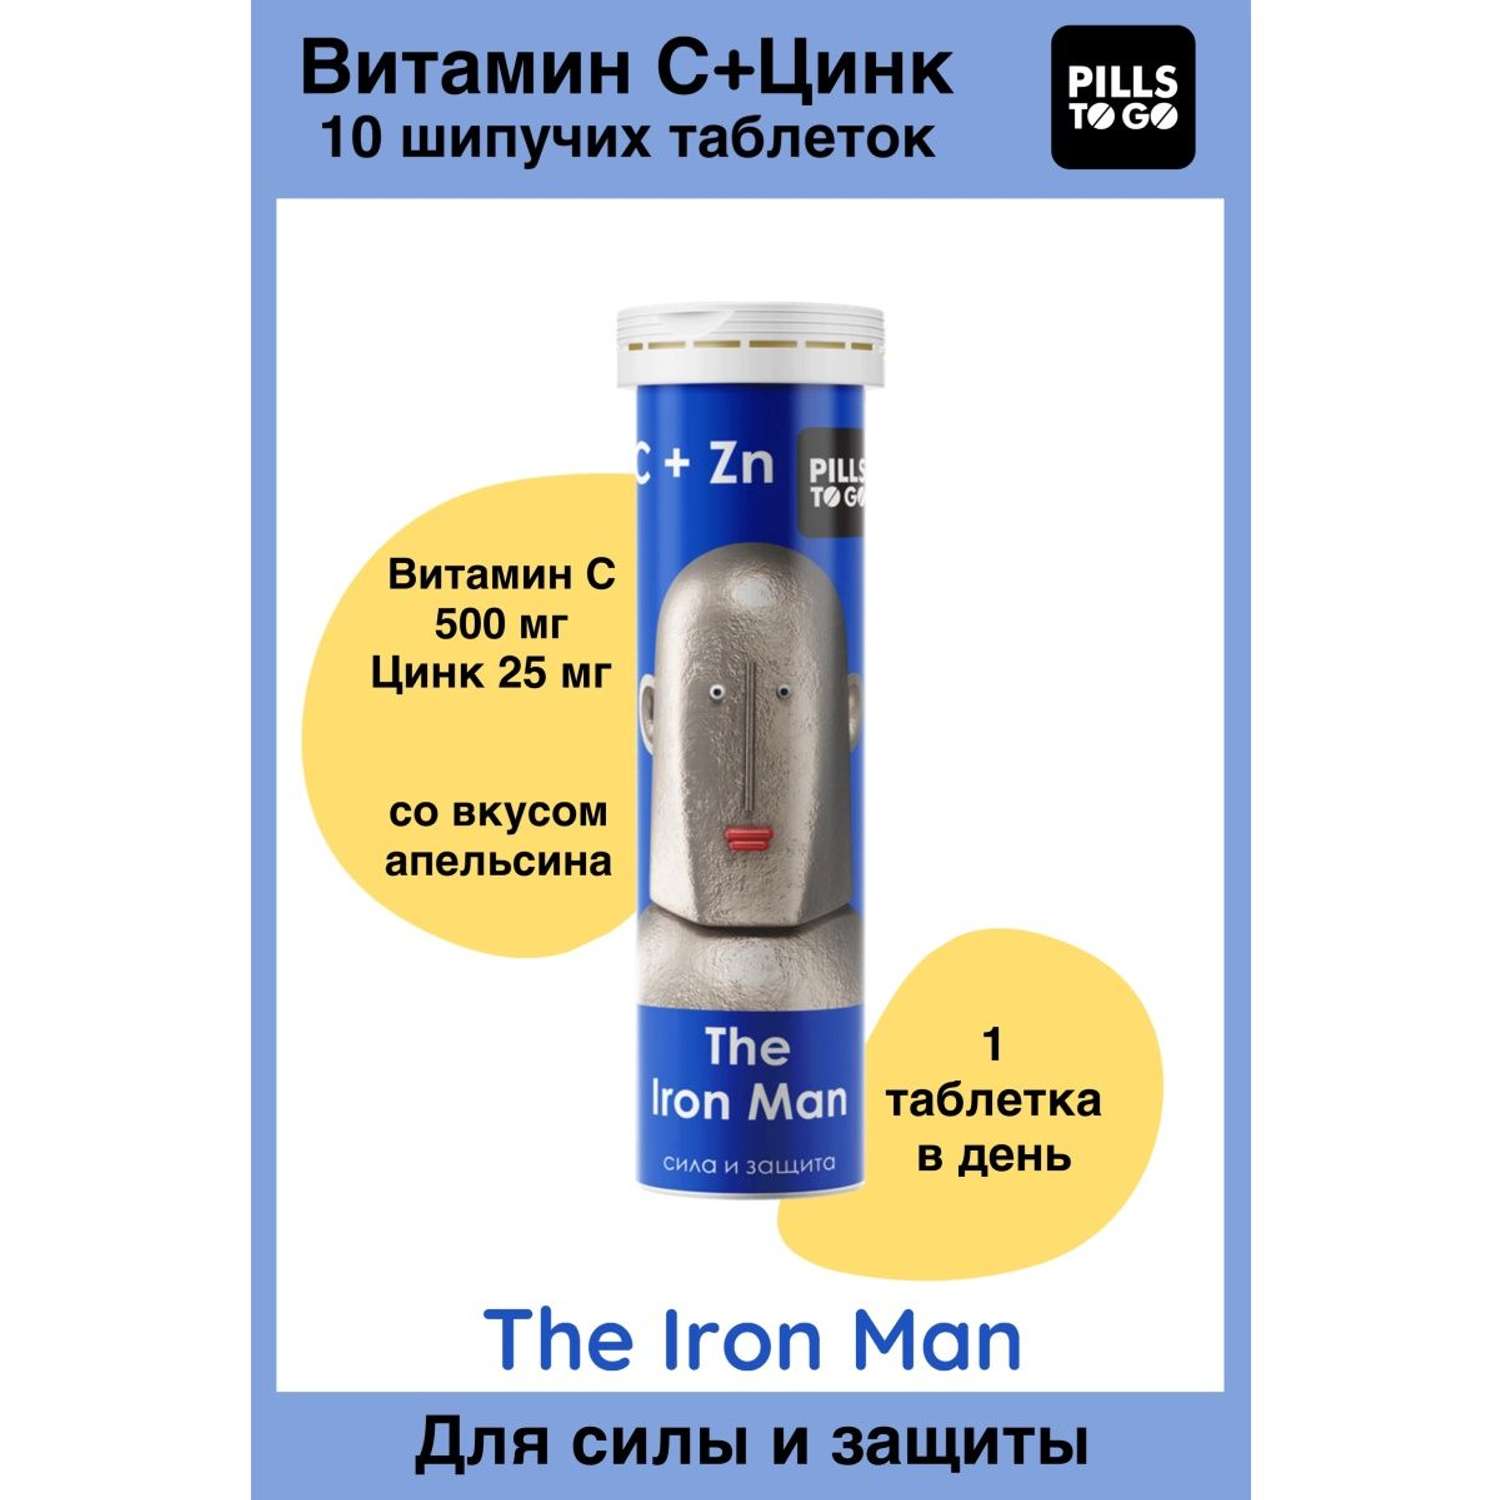 Комплекс PILLS TO GO для силы и защиты The Iron Man Витамин С 500 мг + цинк 25 мг 10 шипучих таблеток - фото 1